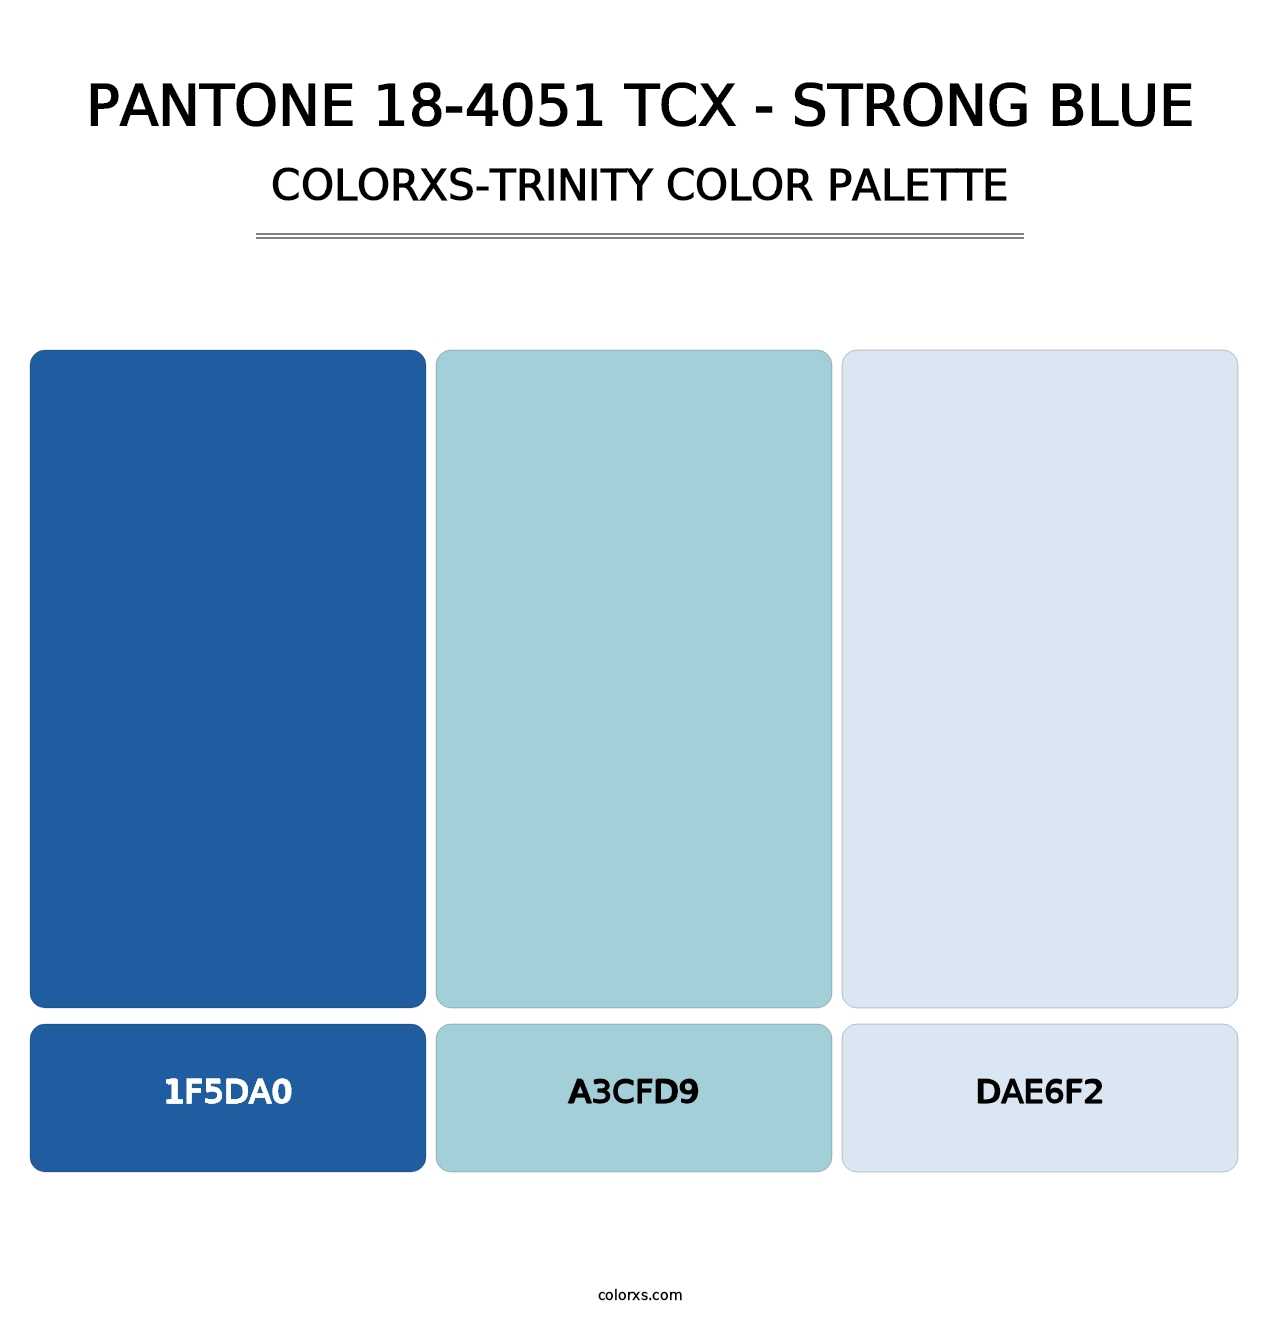 PANTONE 18-4051 TCX - Strong Blue - Colorxs Trinity Palette